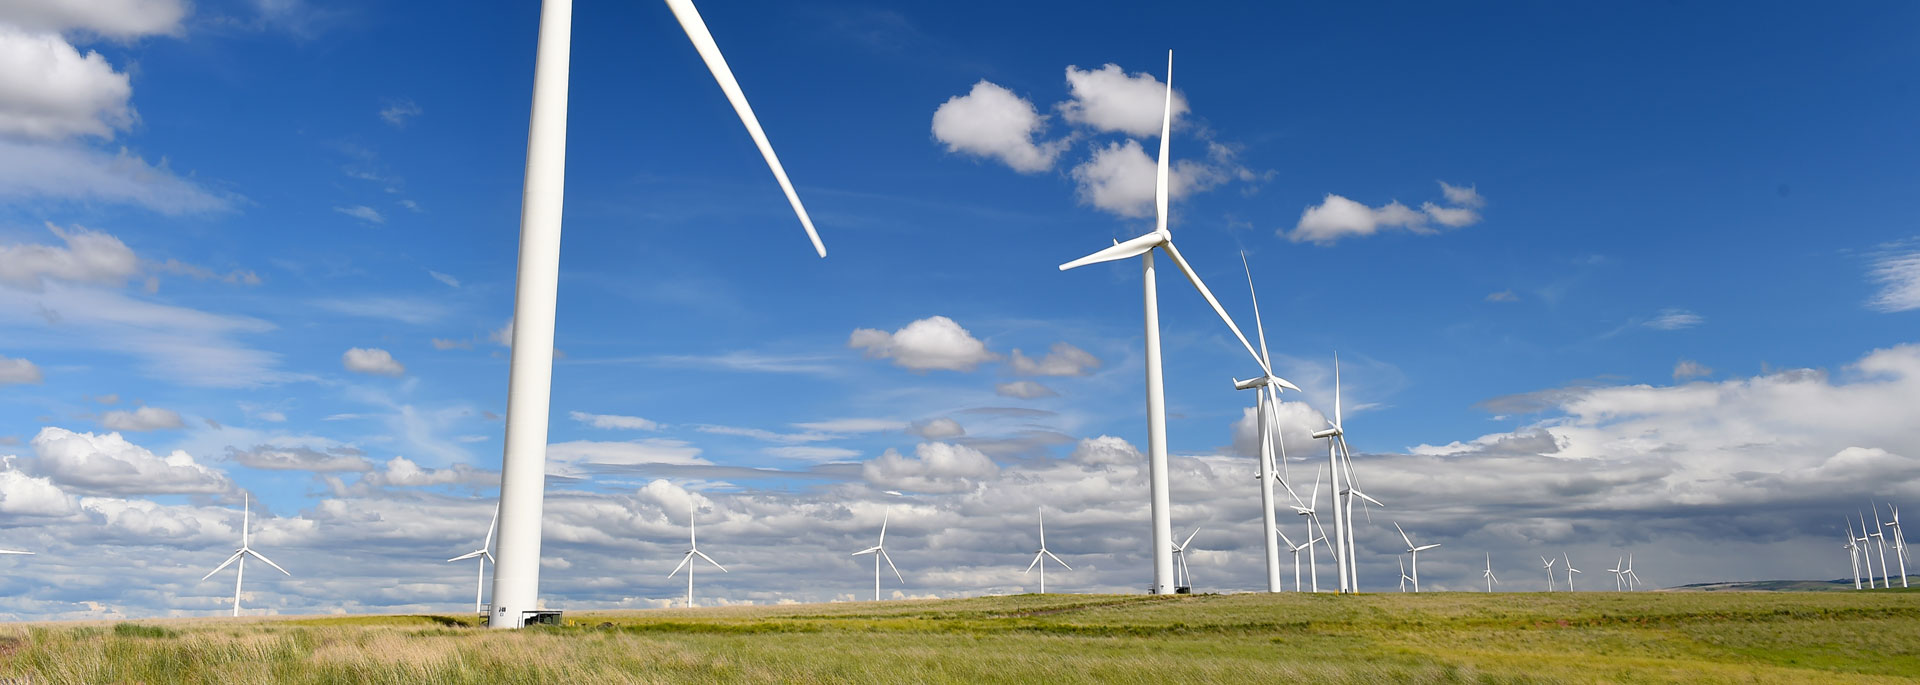 Wind power application